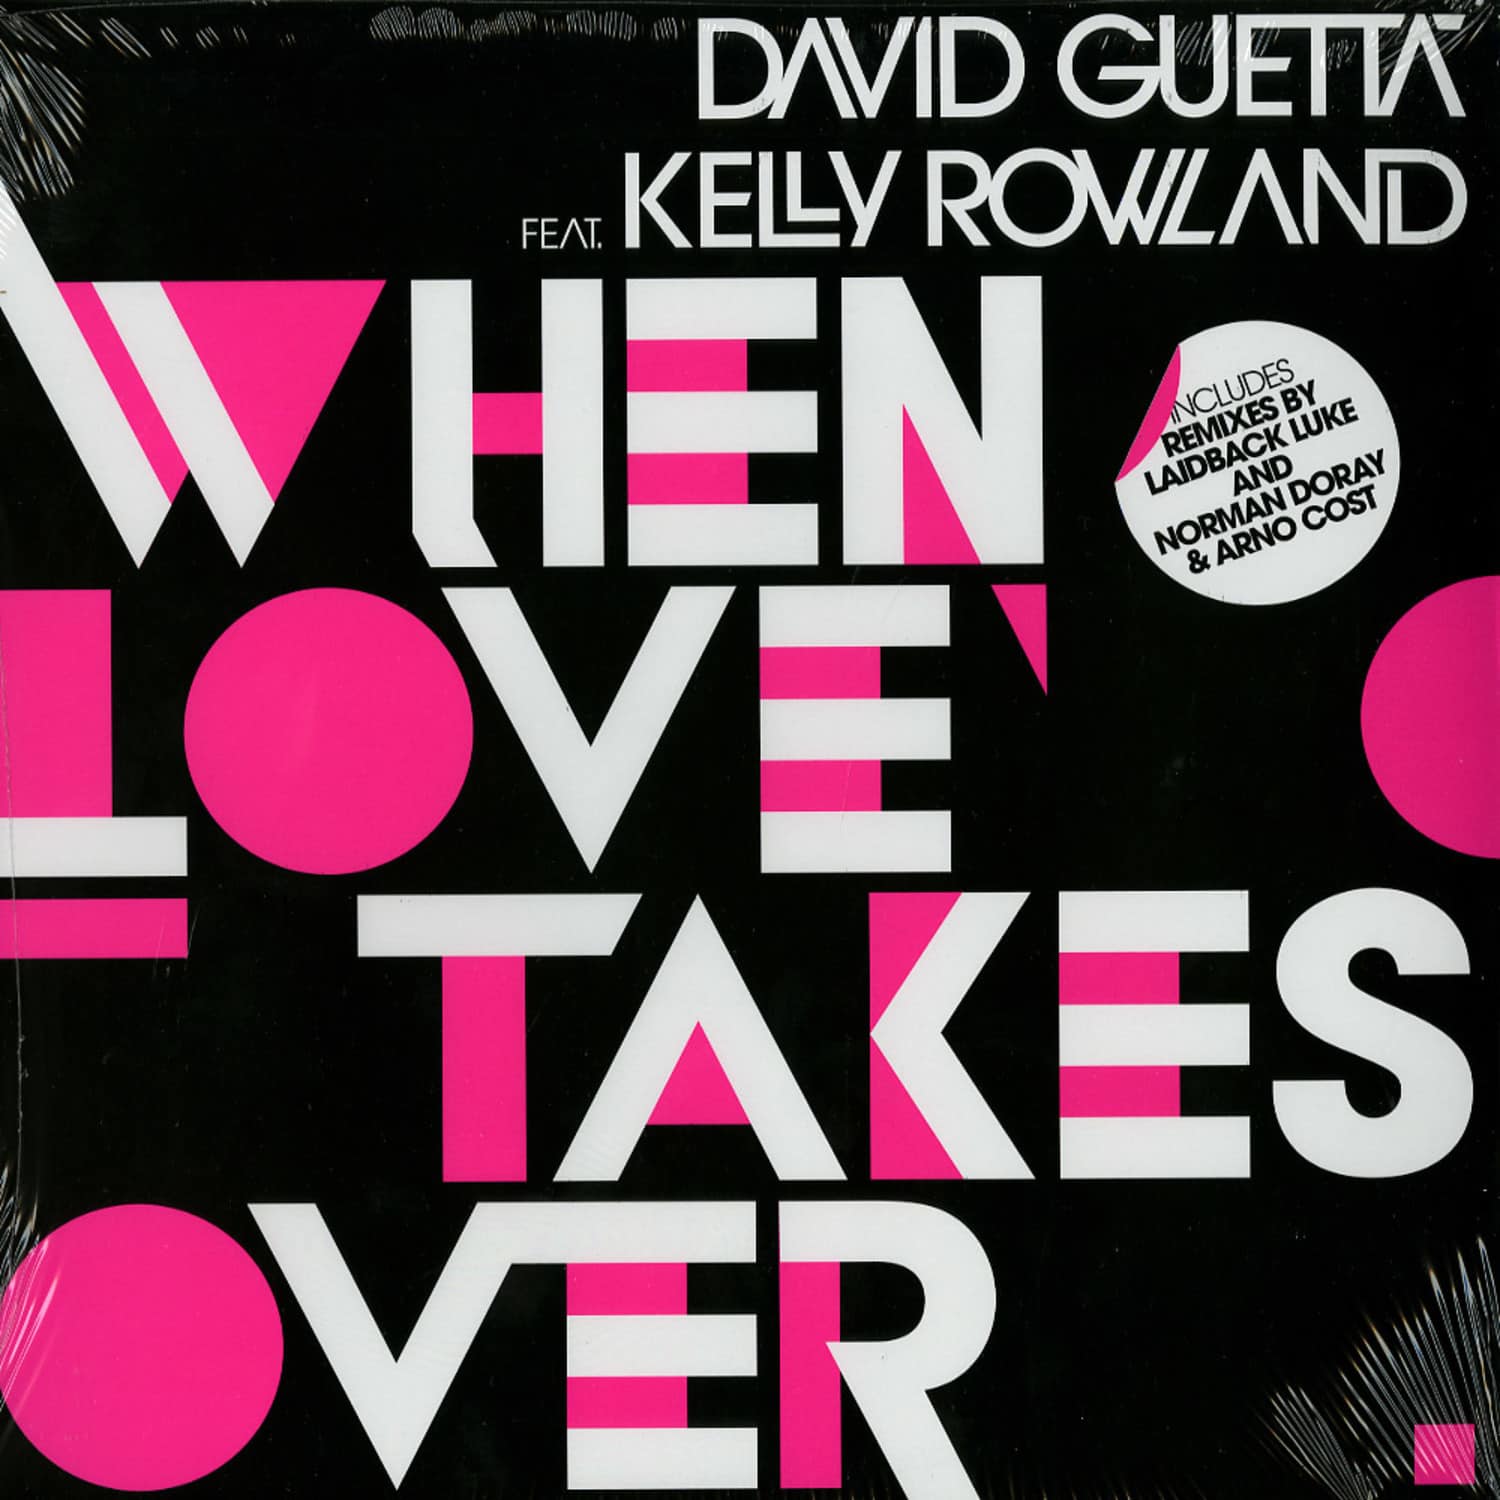 Take this love. David Guetta when Love takes over. When Love takes over Келли Роуленд. David Guetta feat. Kelly Rowland - when Love takes over. David Guetta Love.